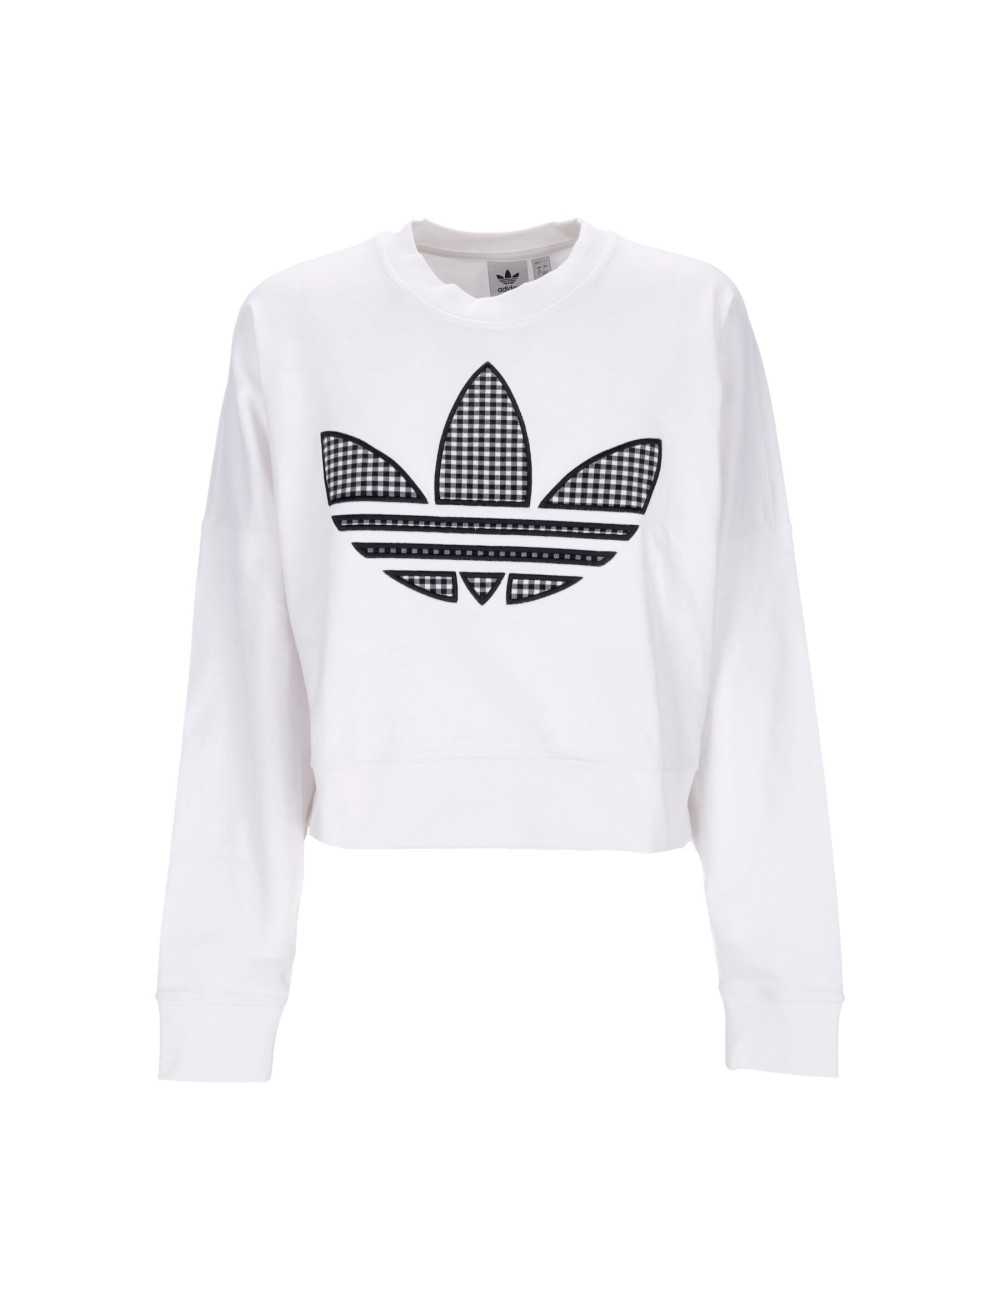 Felpa Adidas Originals donna trifoglio bianca logo - Felpe Donna